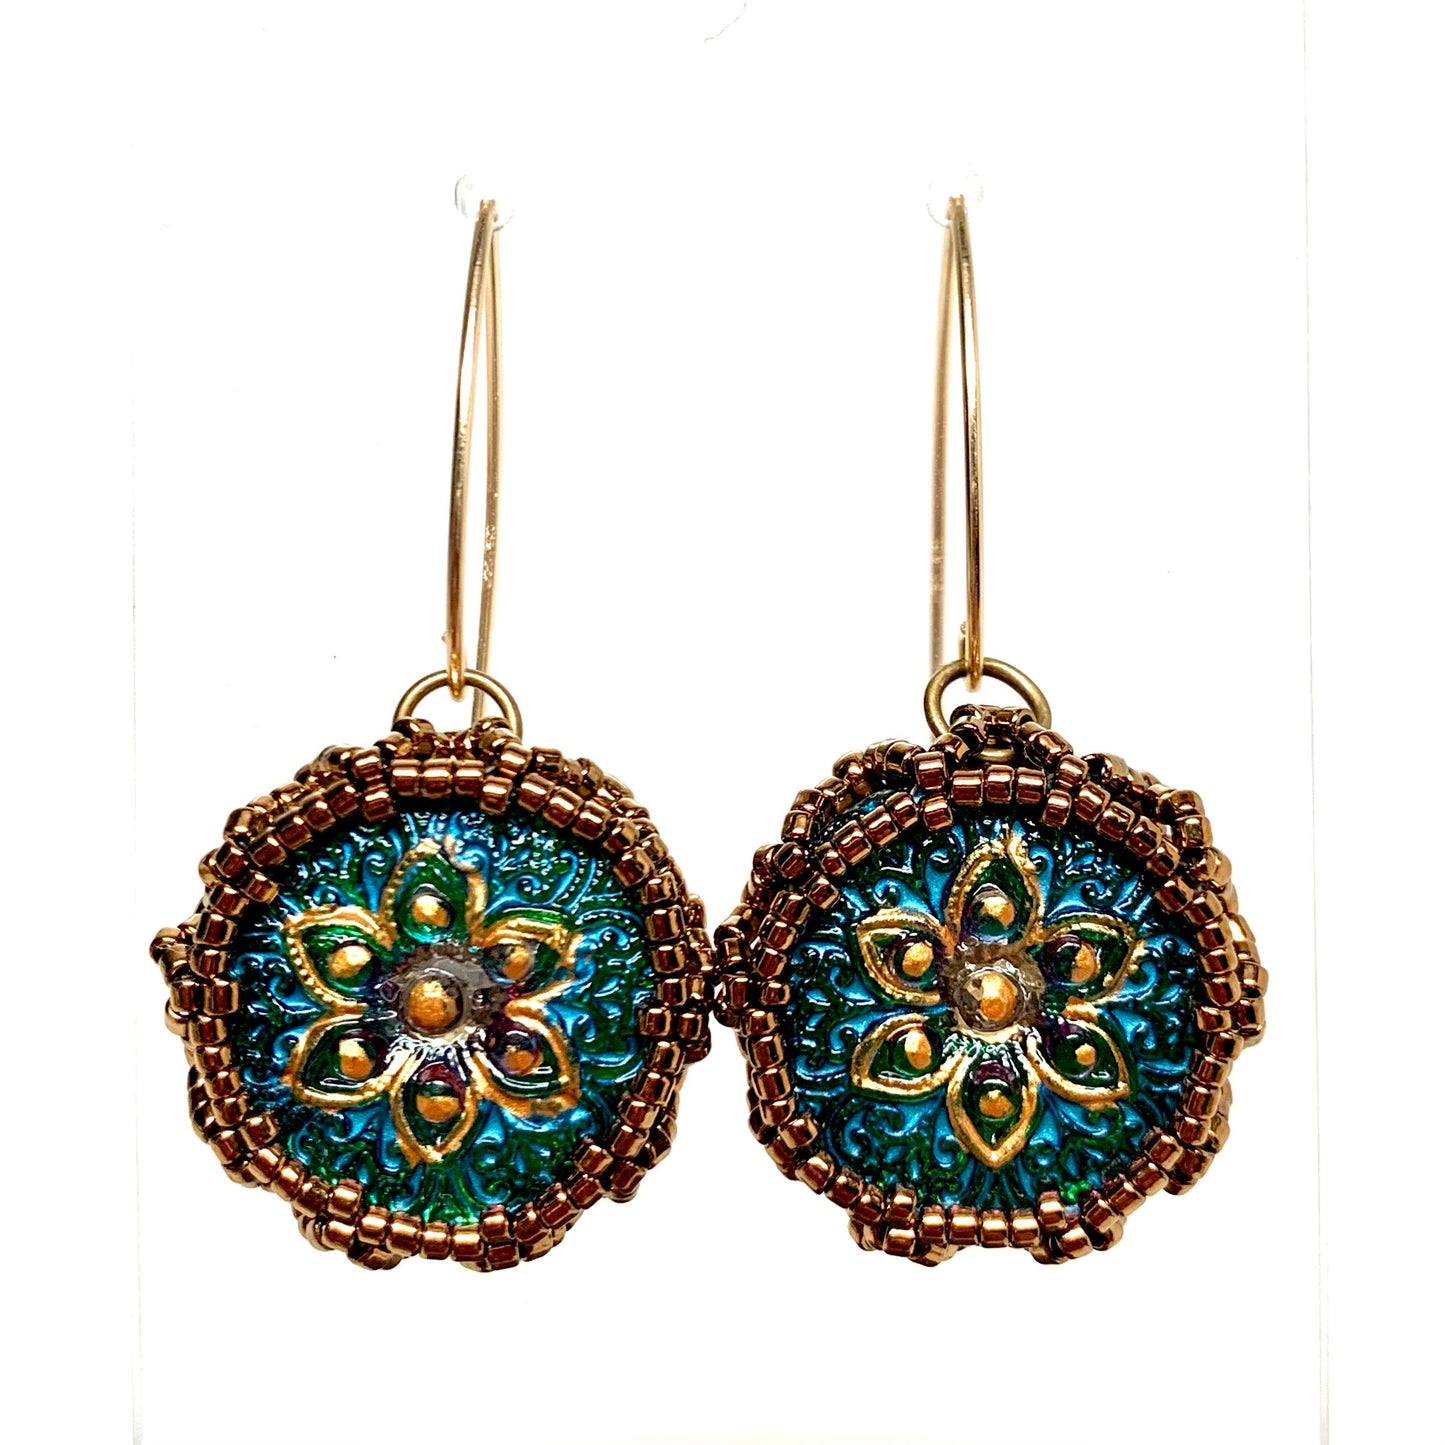 Vintage Style Czech Button Earrings | Persian Star Dark Iridescent